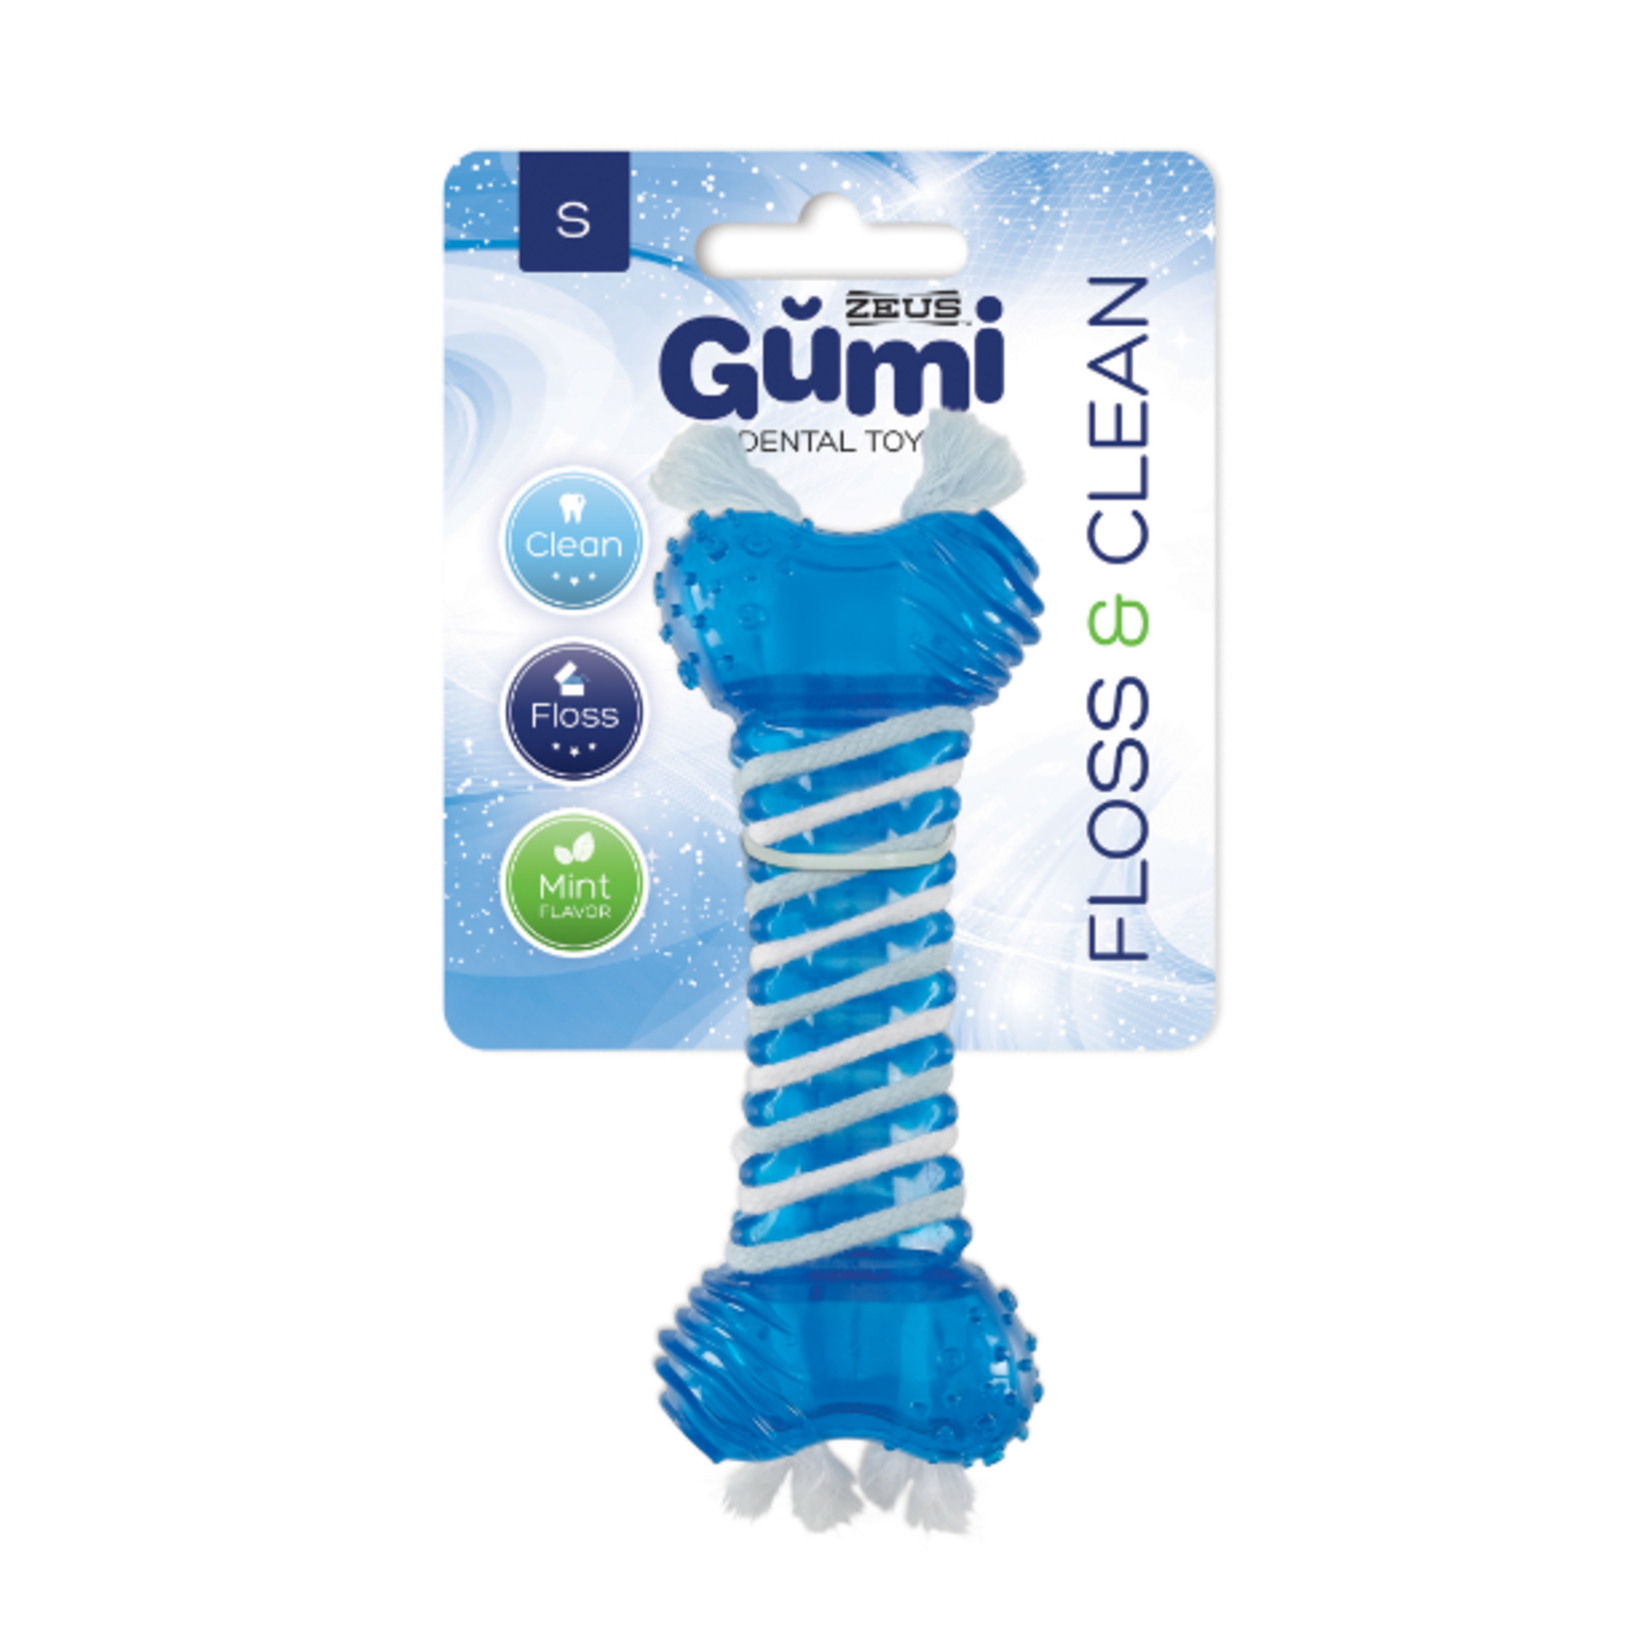 Zeus Gumi Dental Dog Toy - Floss & Clean